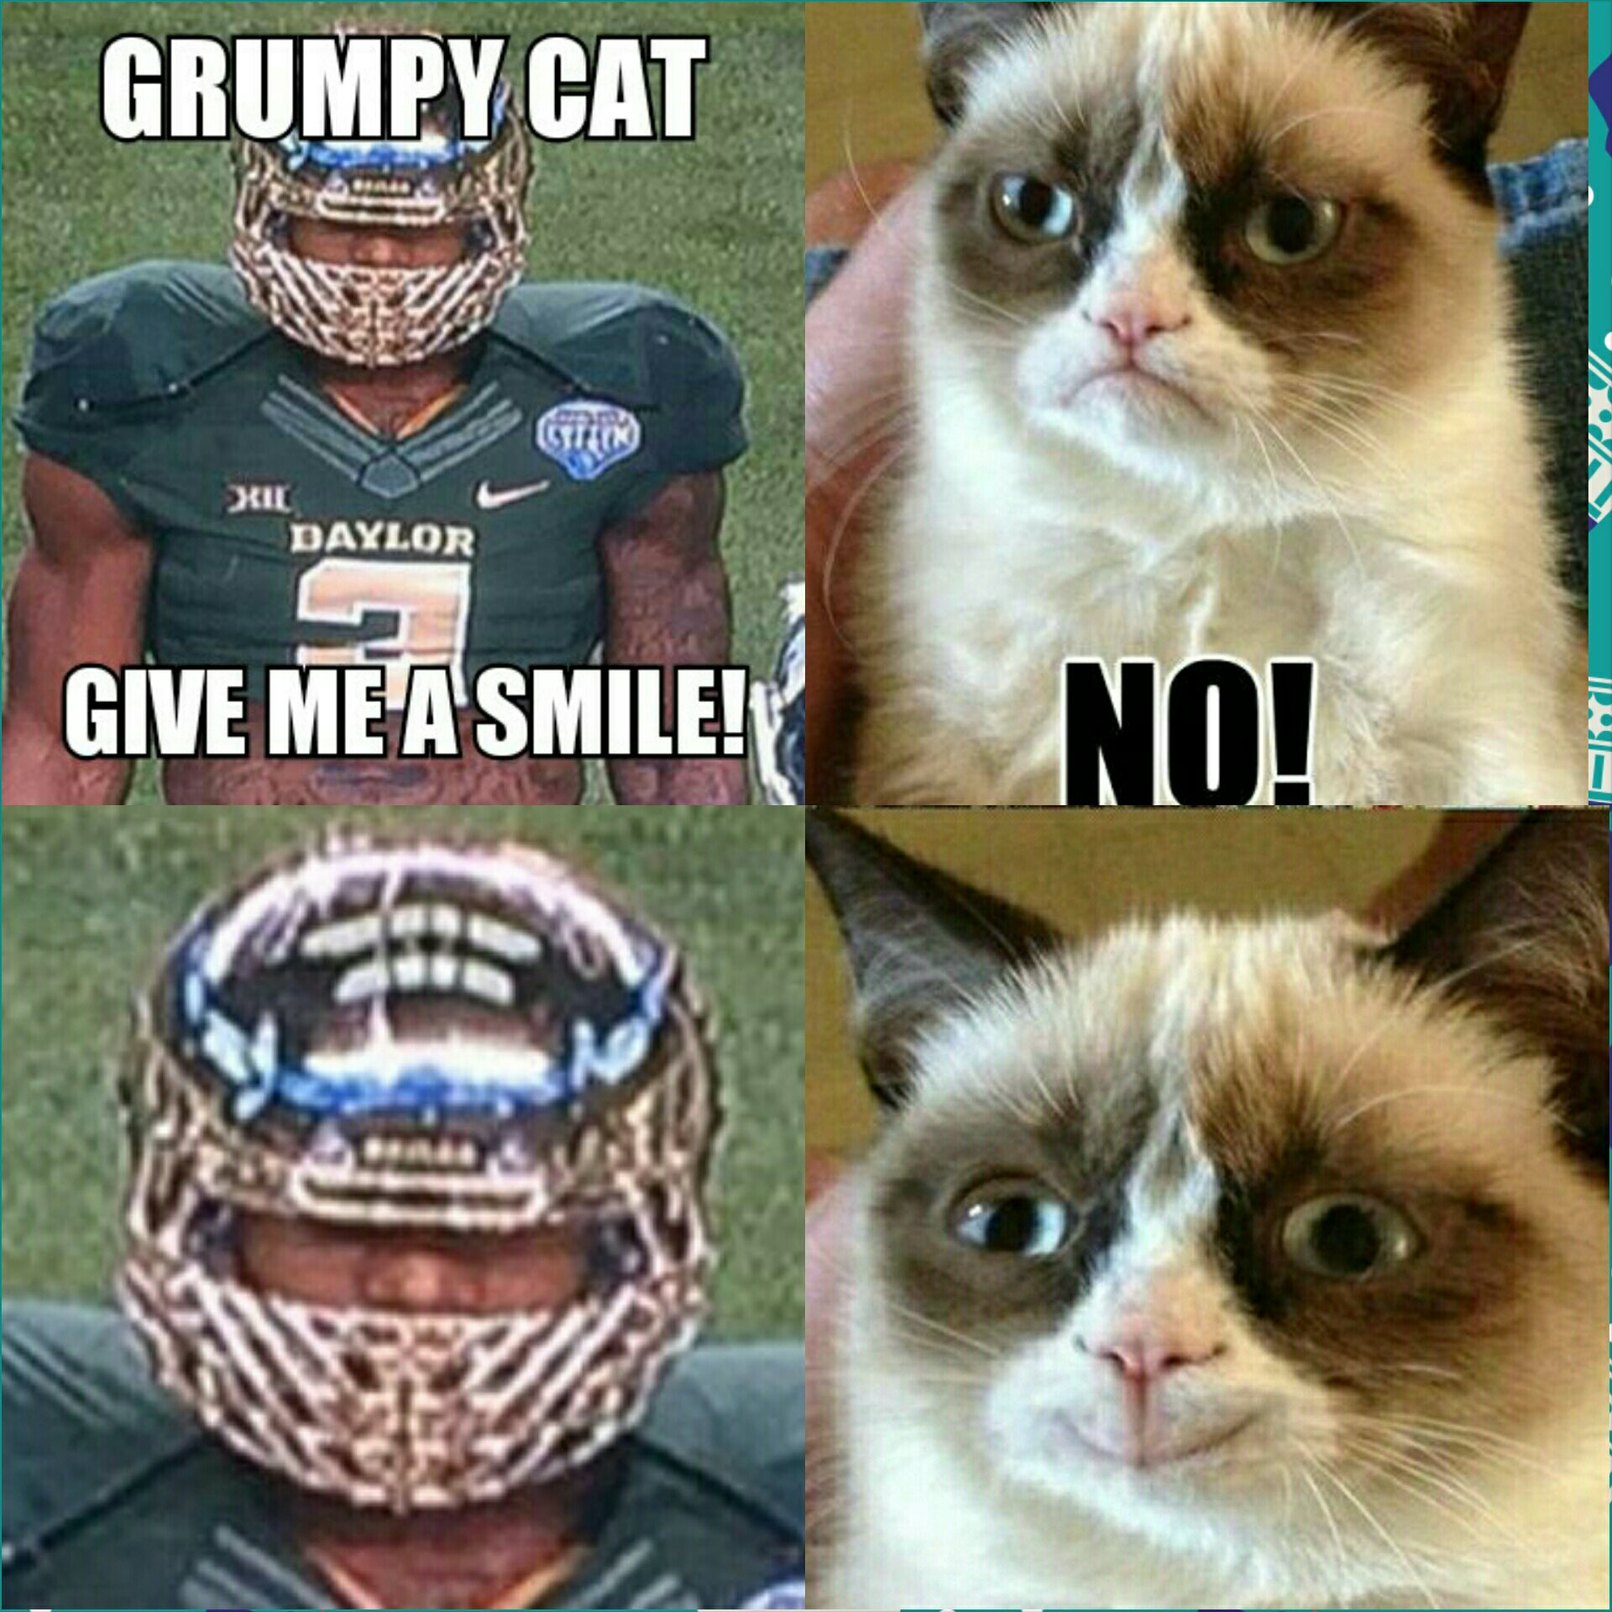 Shawn vs grumpy - meme